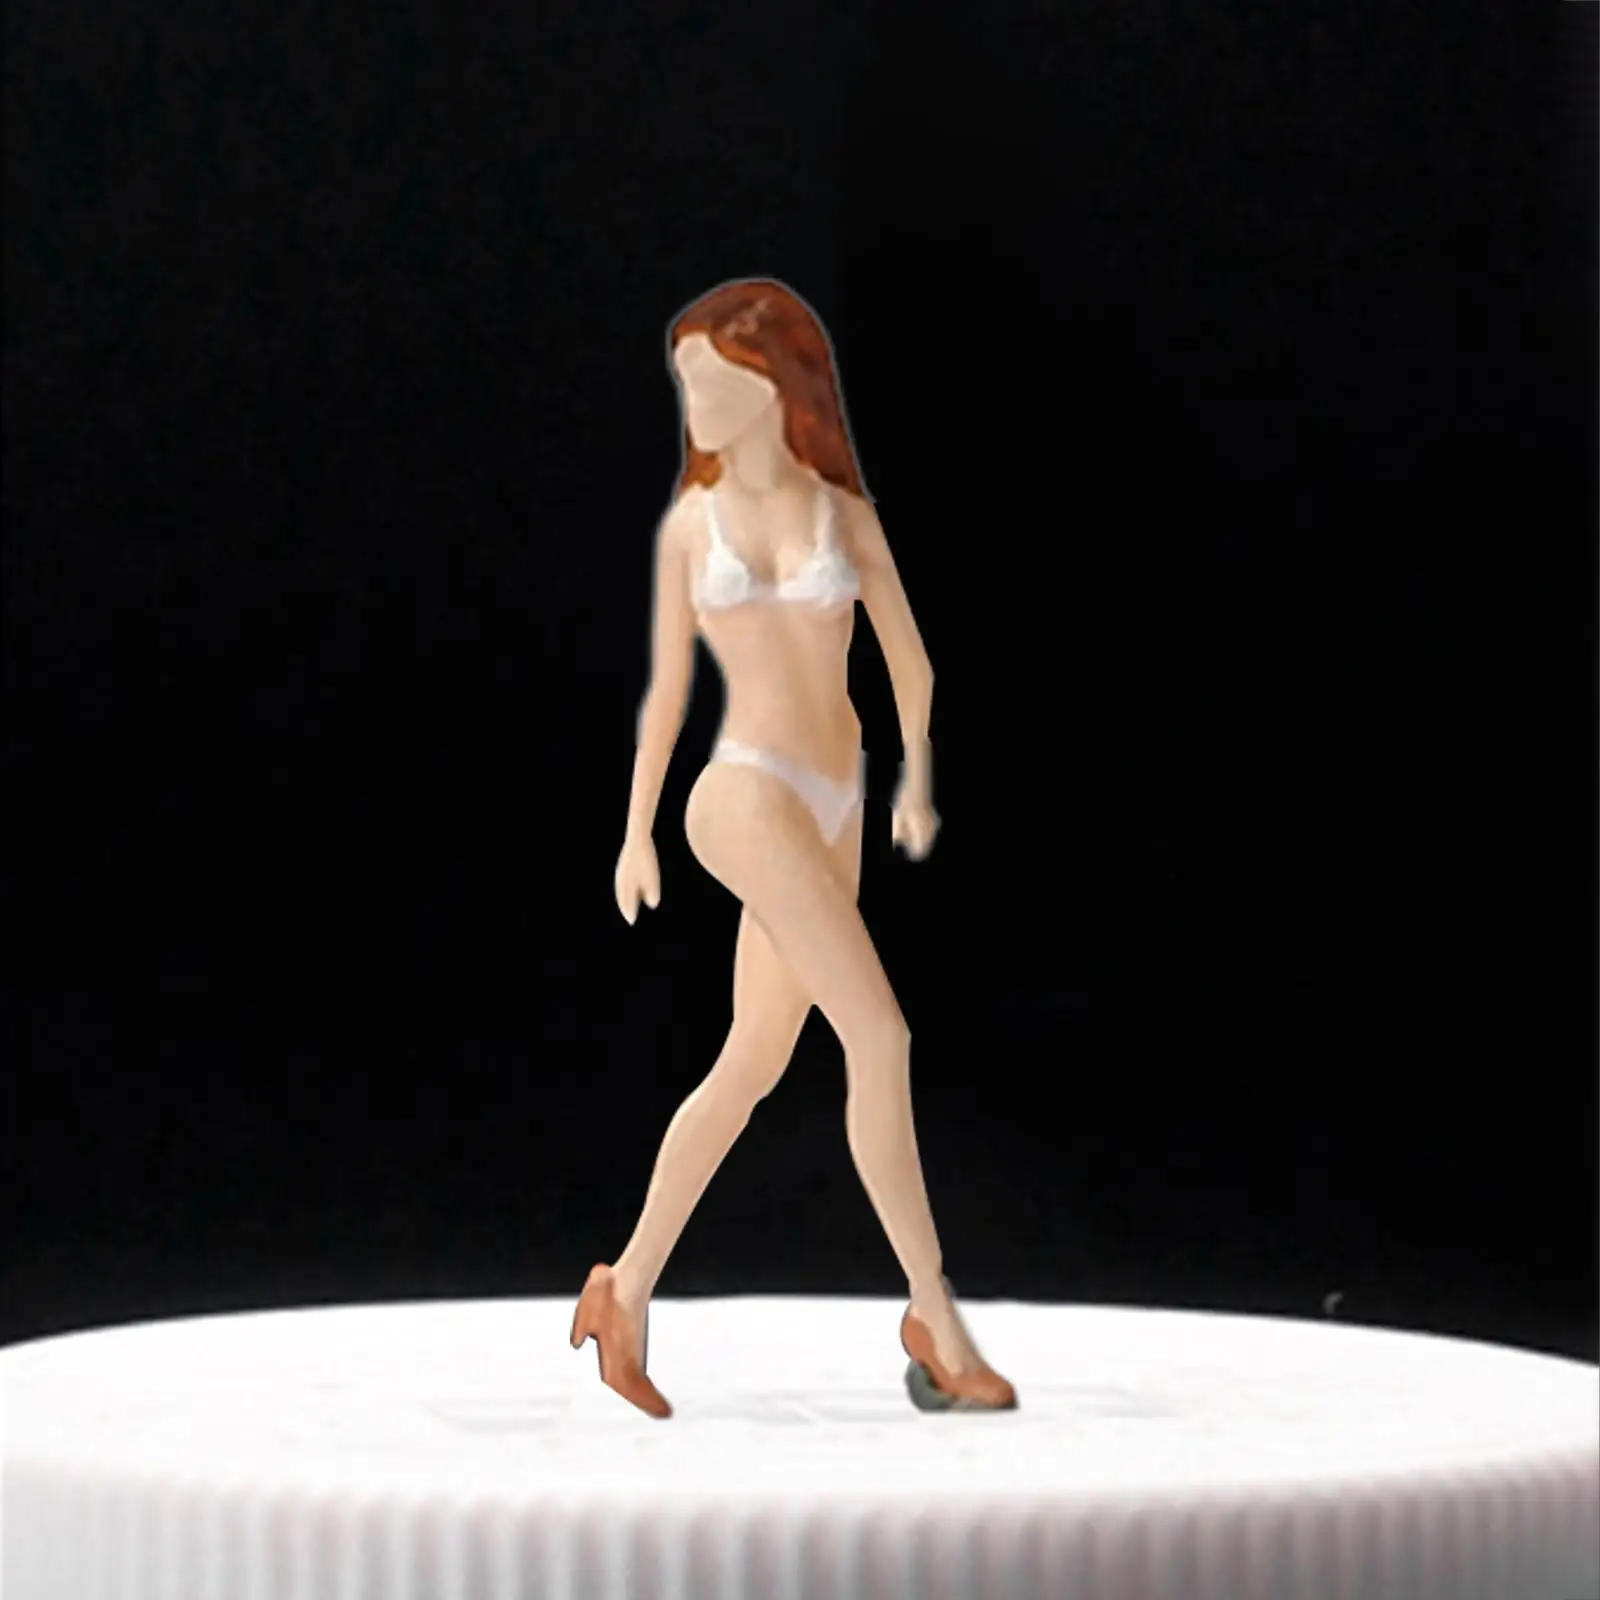 1/64 Female Models Figurine Simulation Figurines for Dollhouse Layout Decor